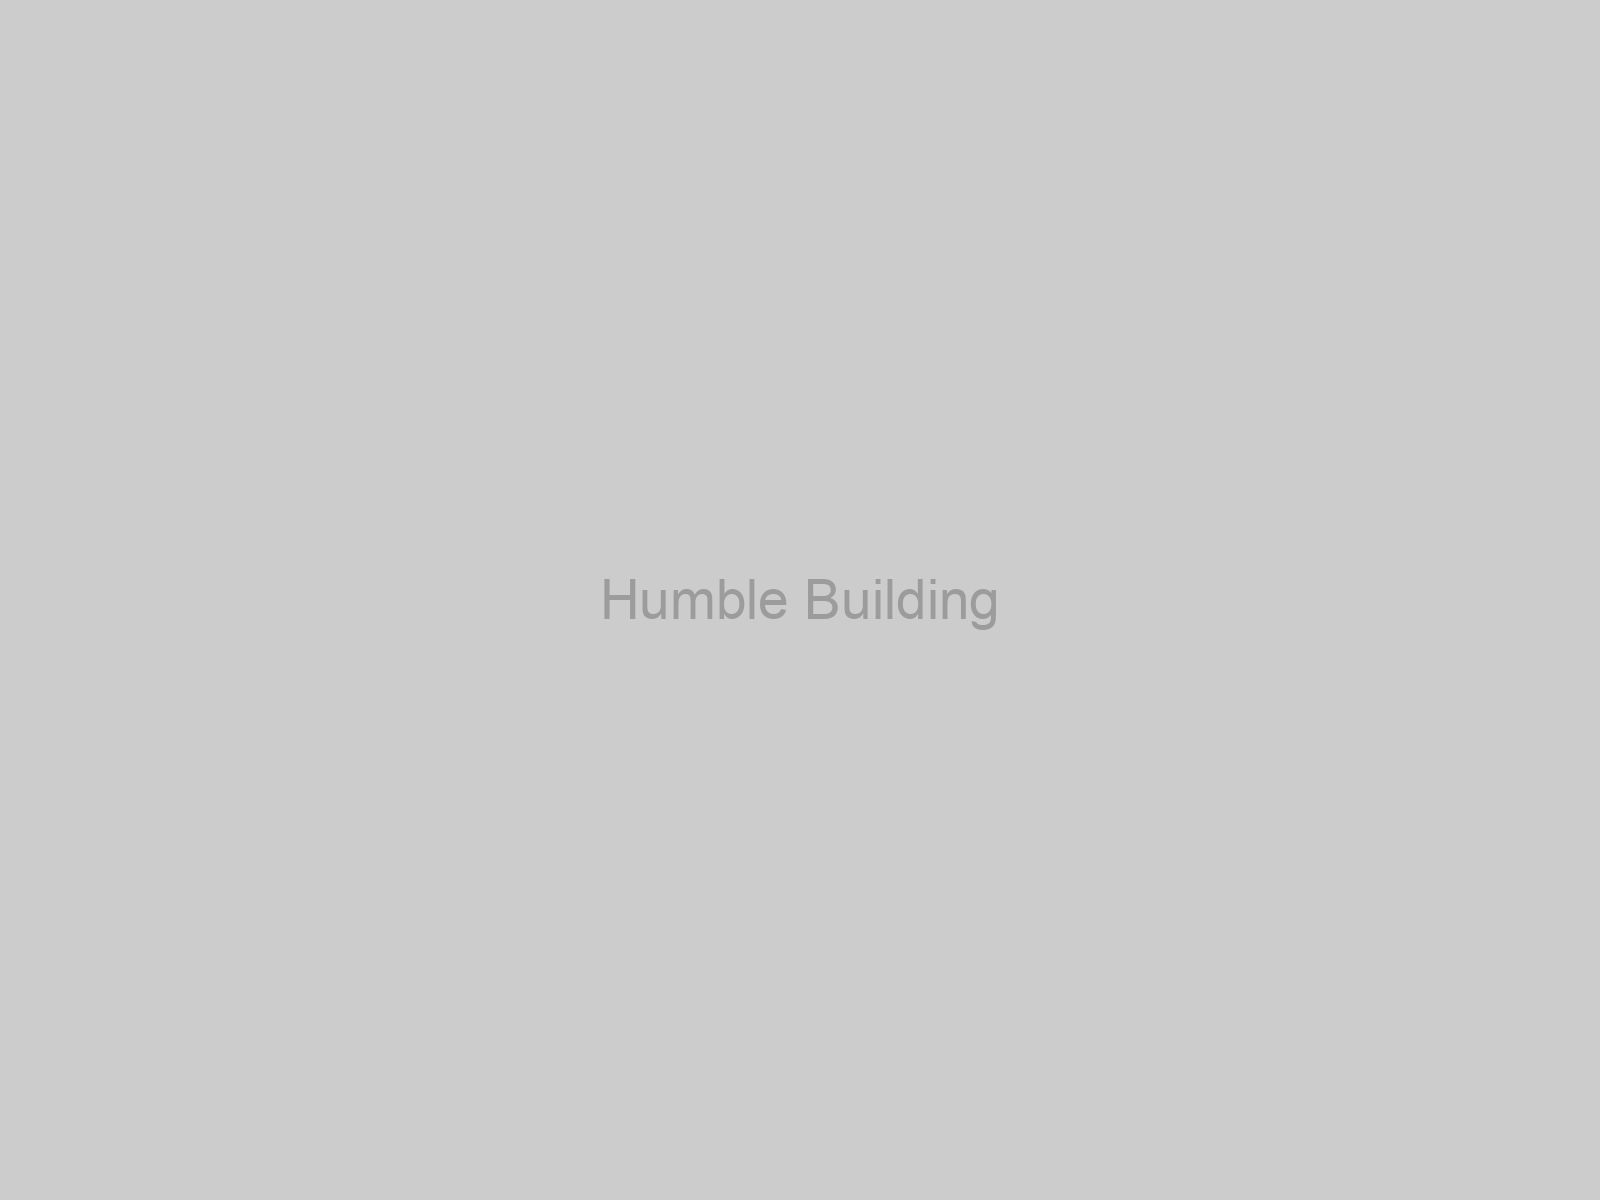 Humble Building